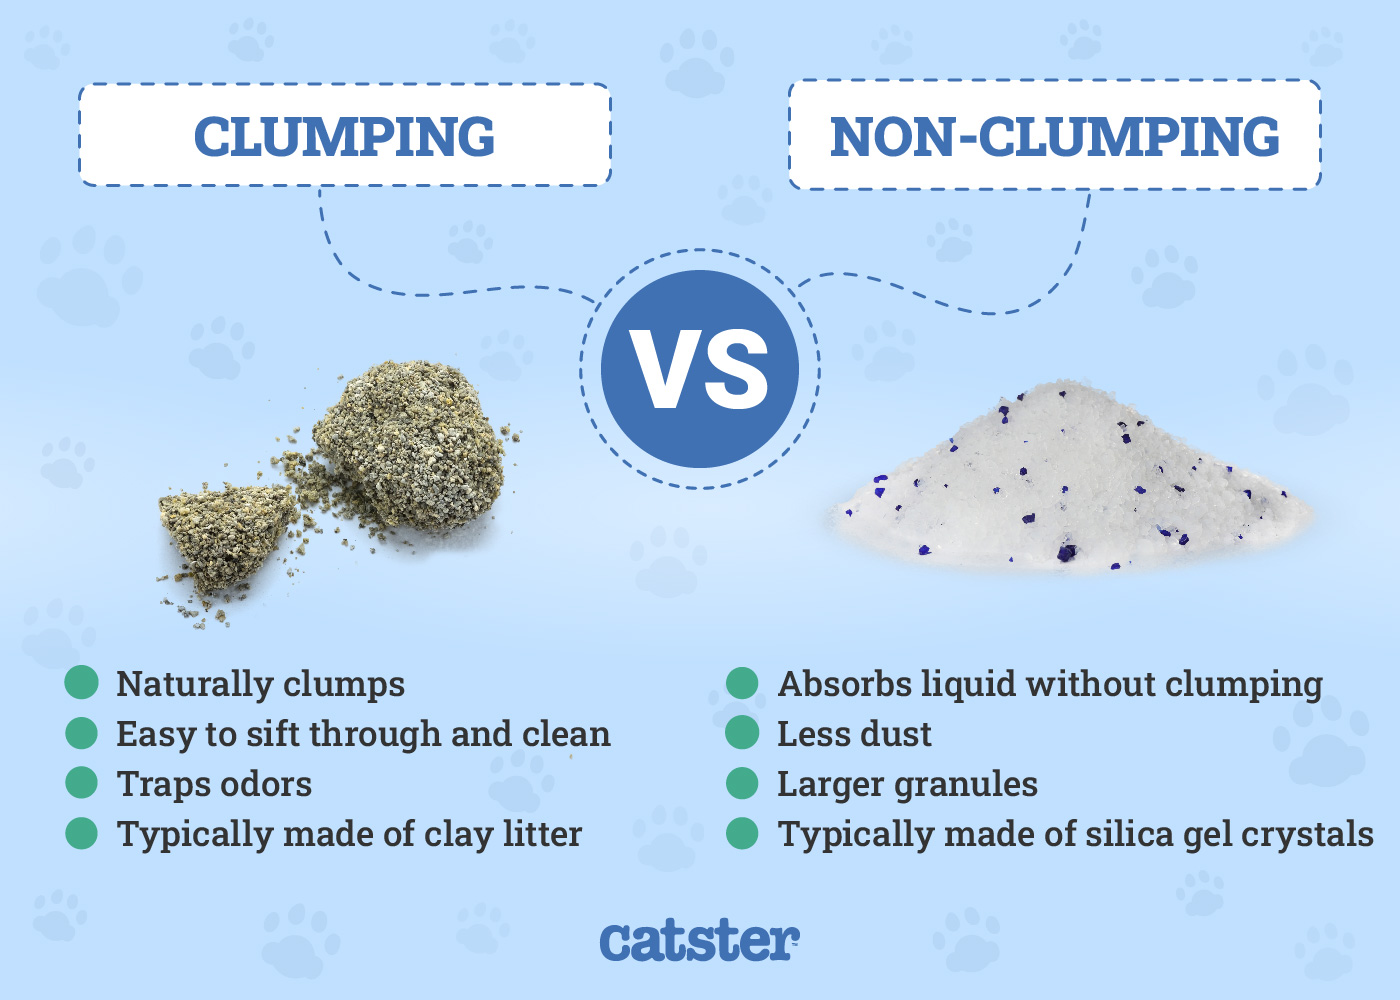 Climpings vs non climping cat litter